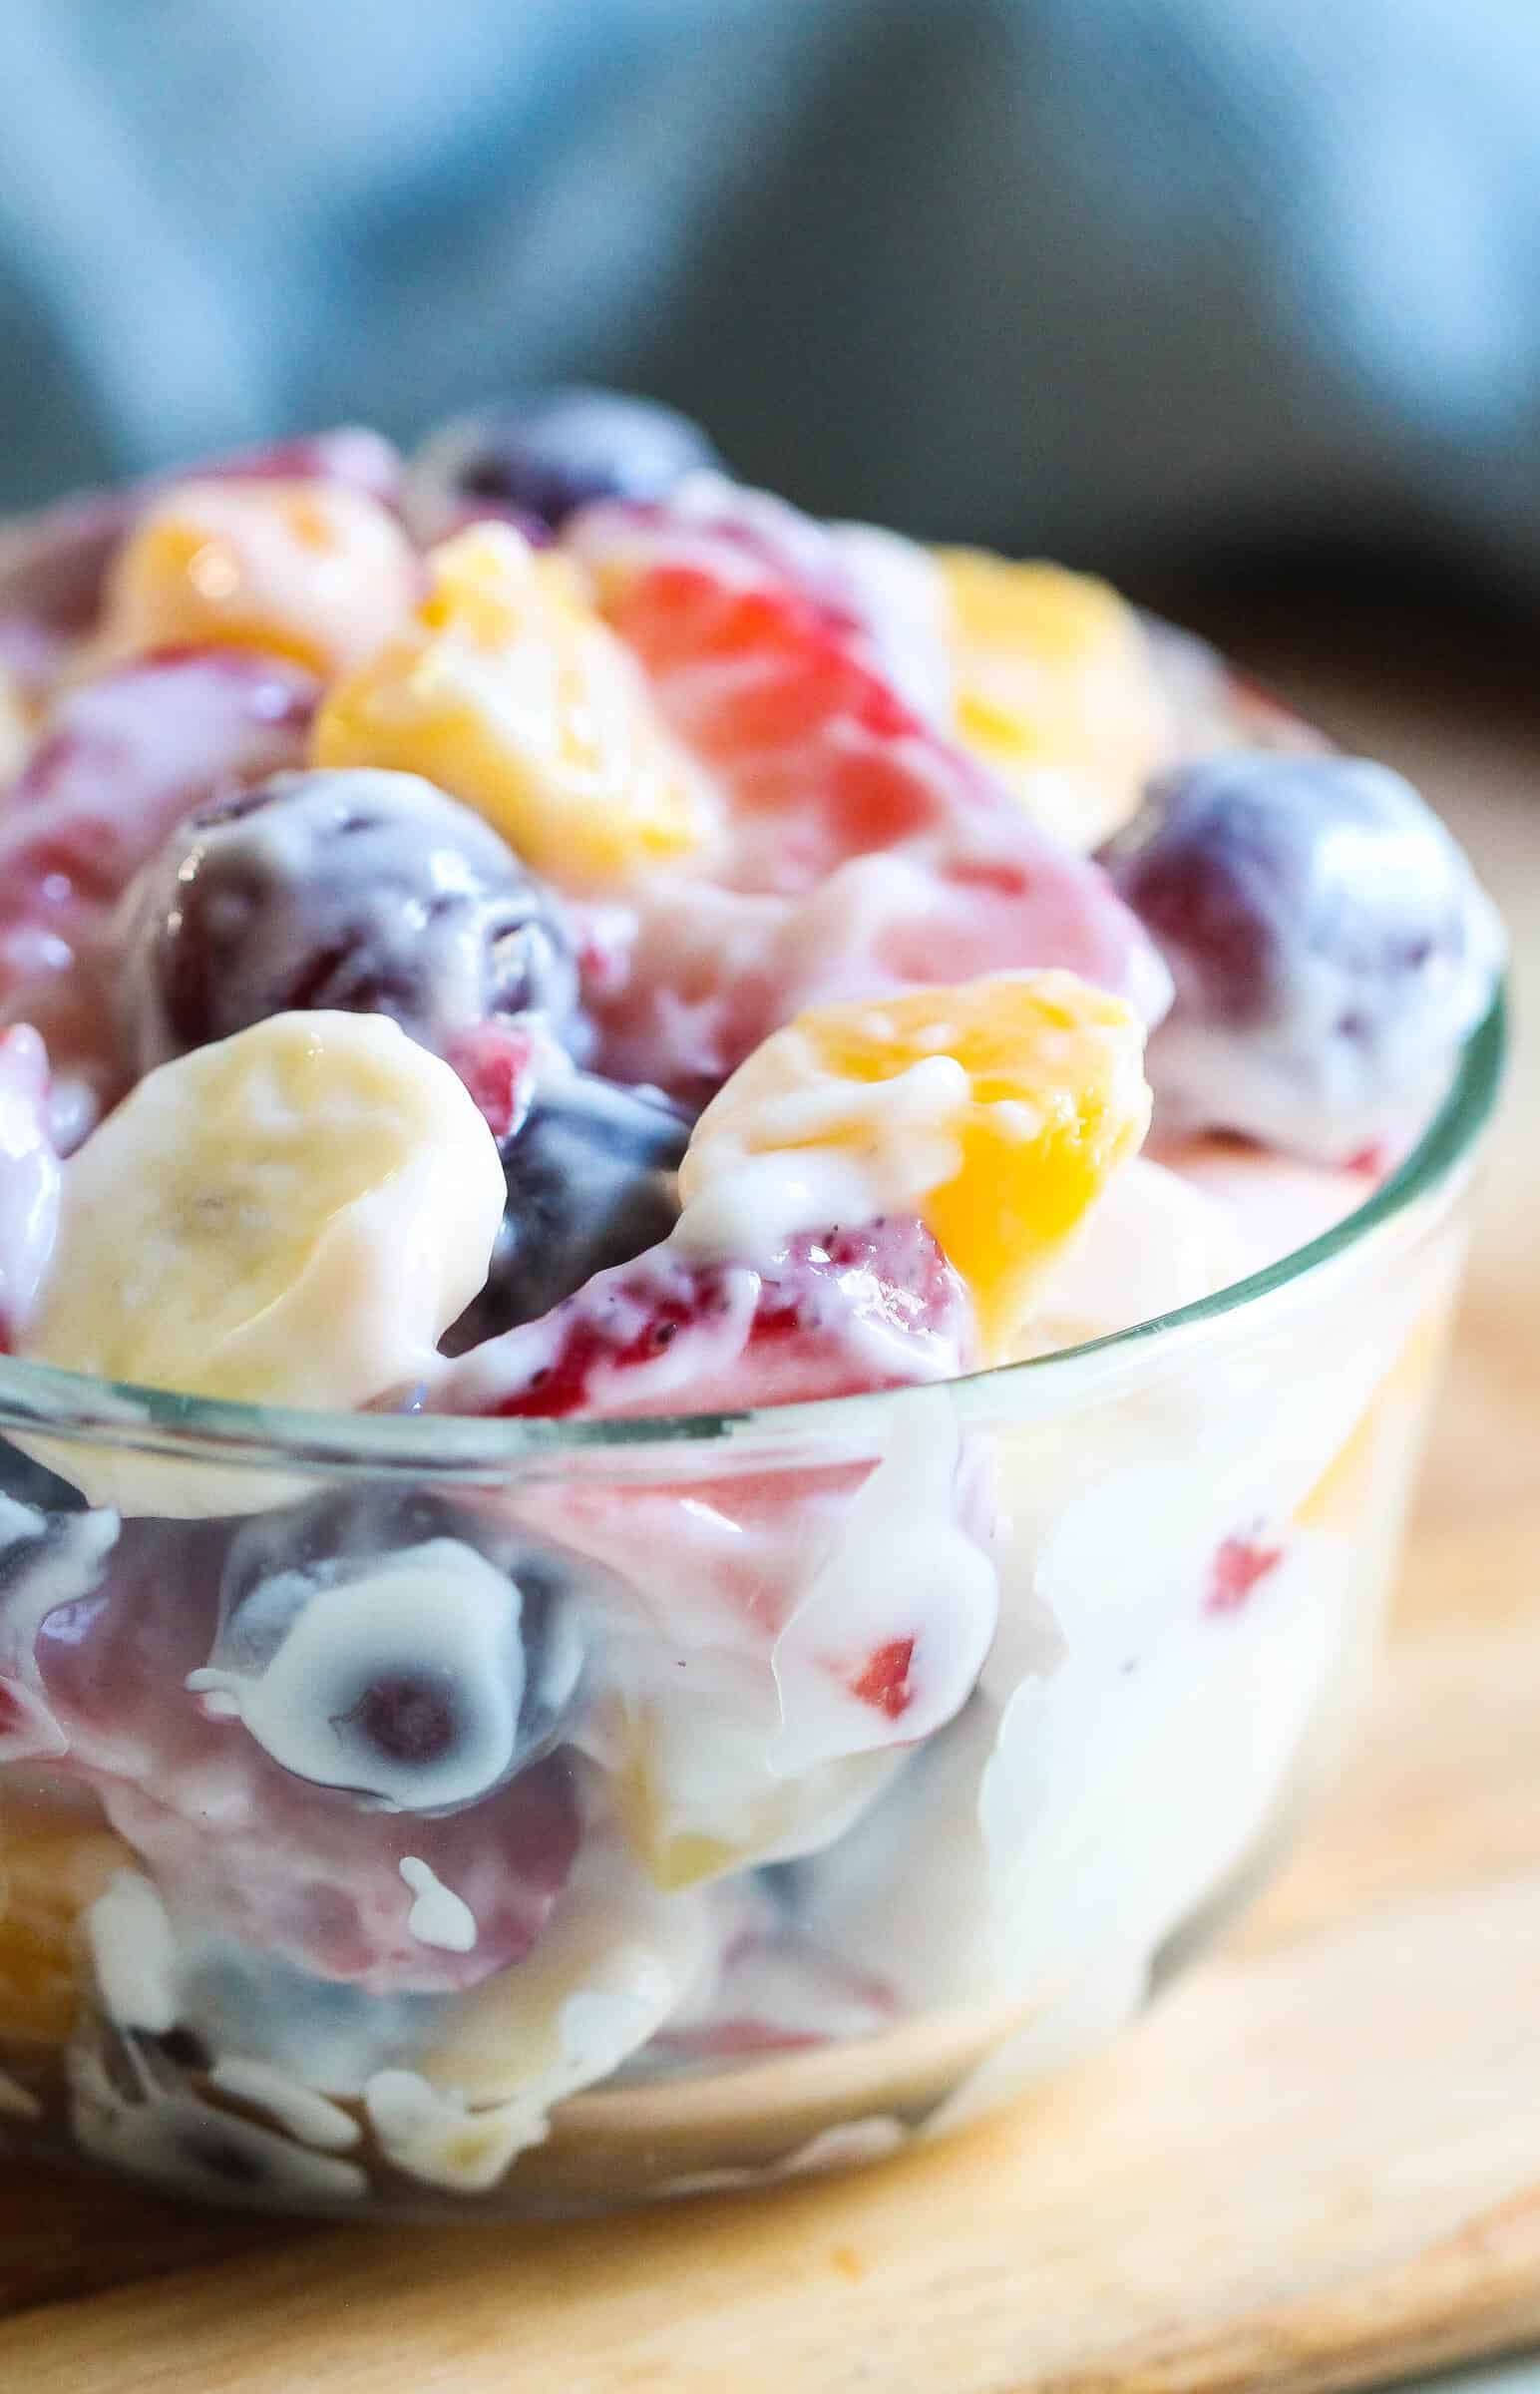 fruit salads with yogurt